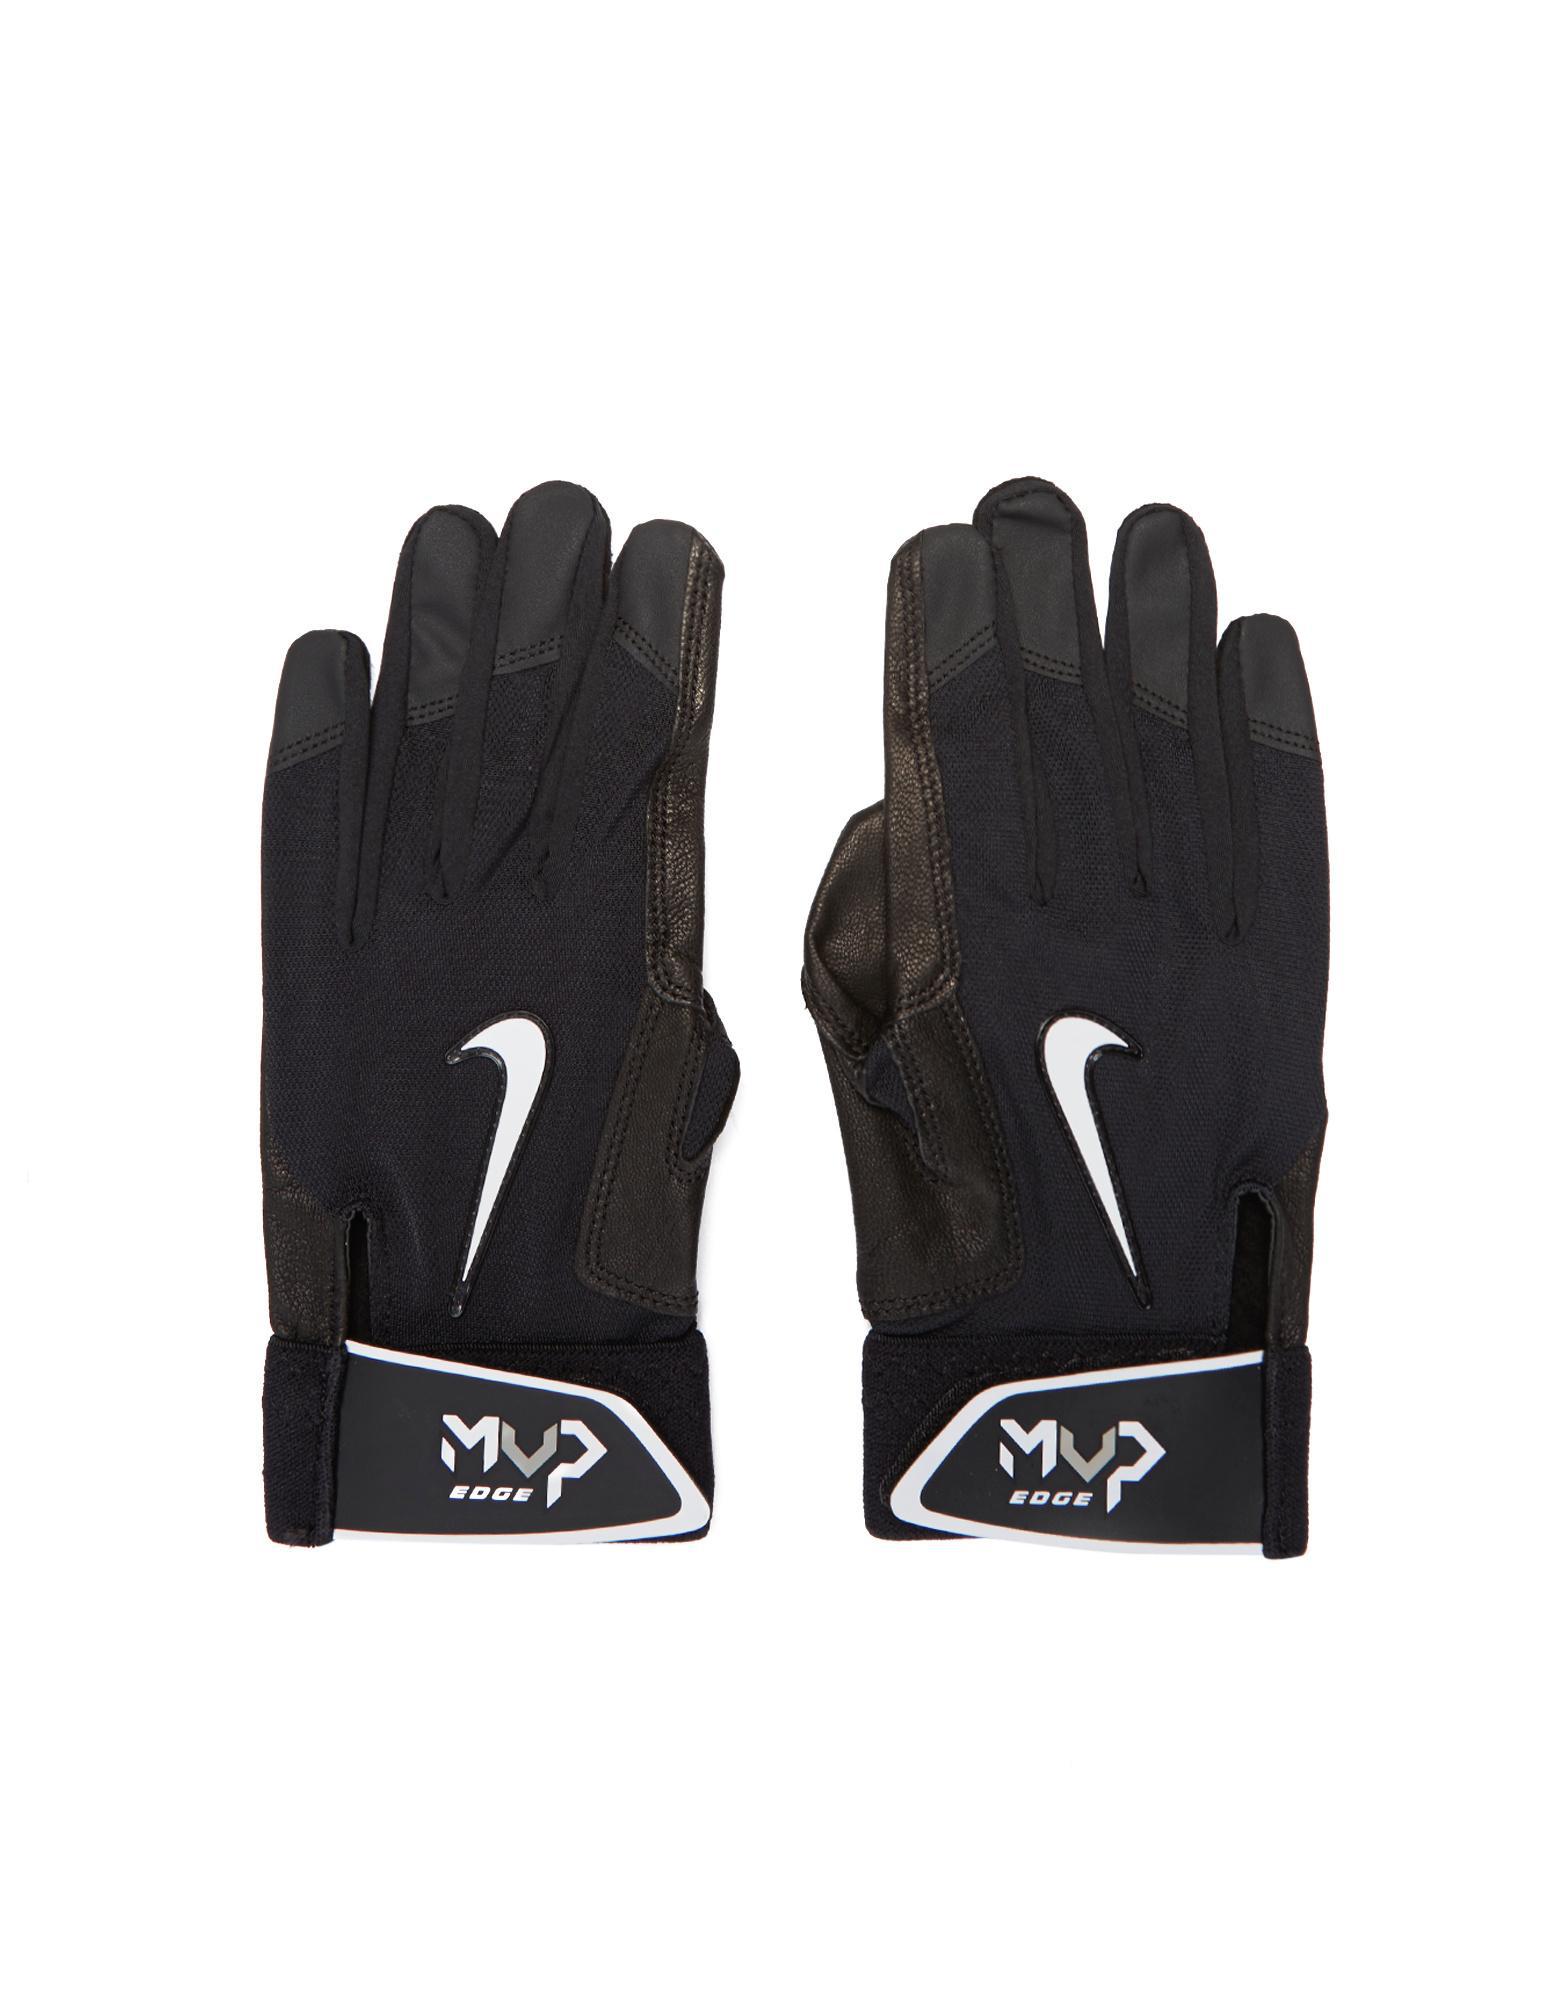 Nike Leather Mvp Edge Batting Gloves in 